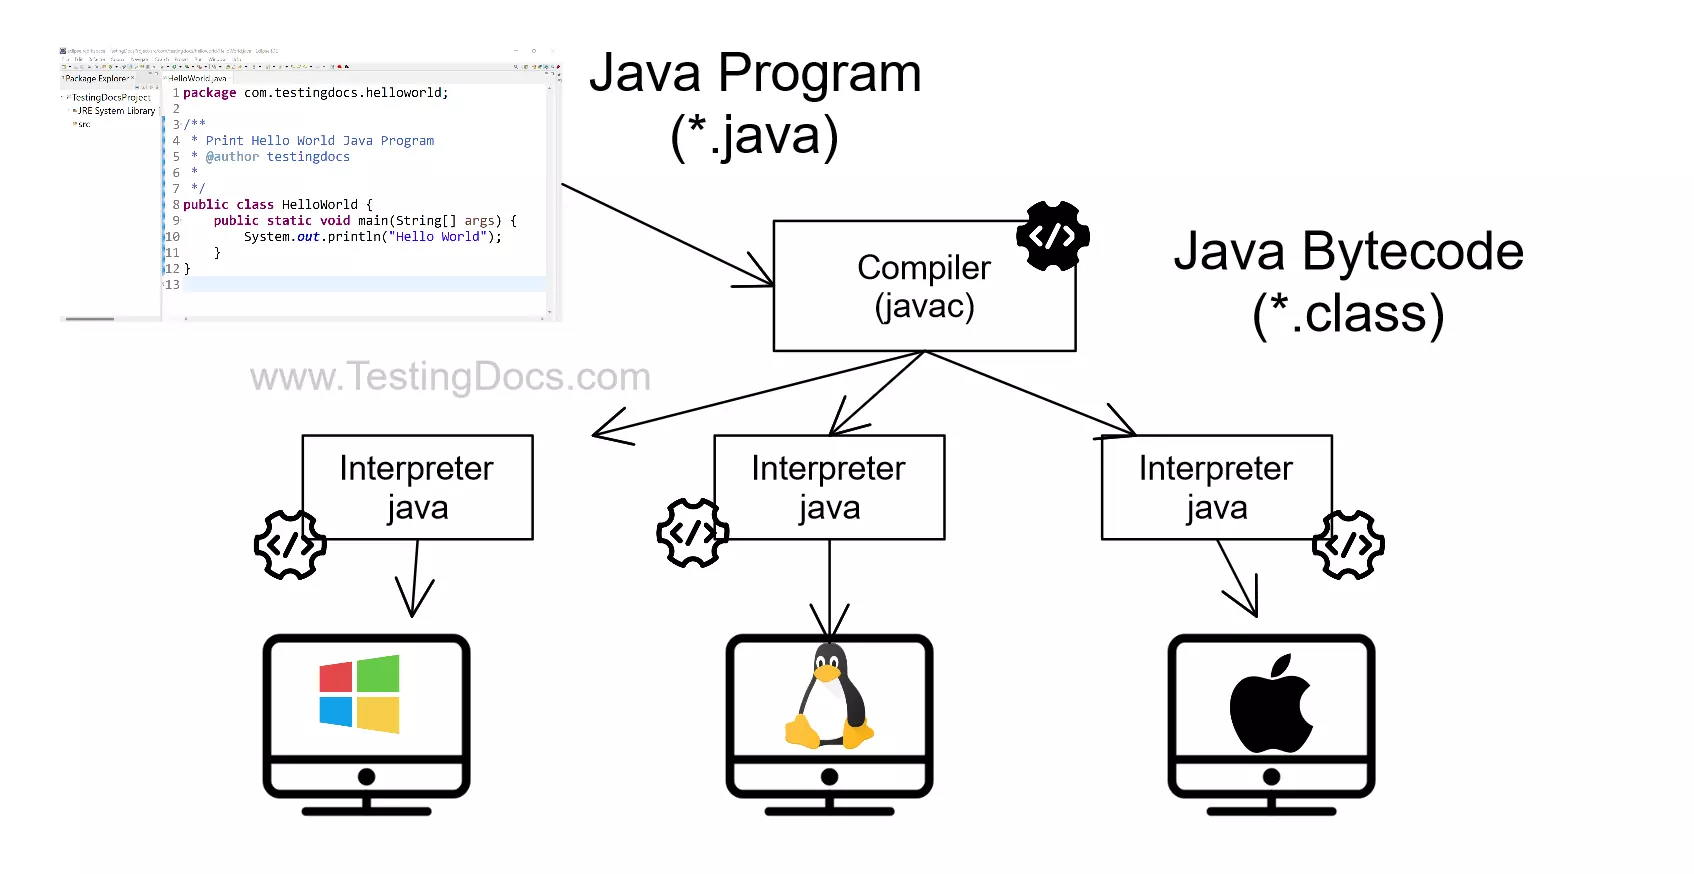 Java Interpreter